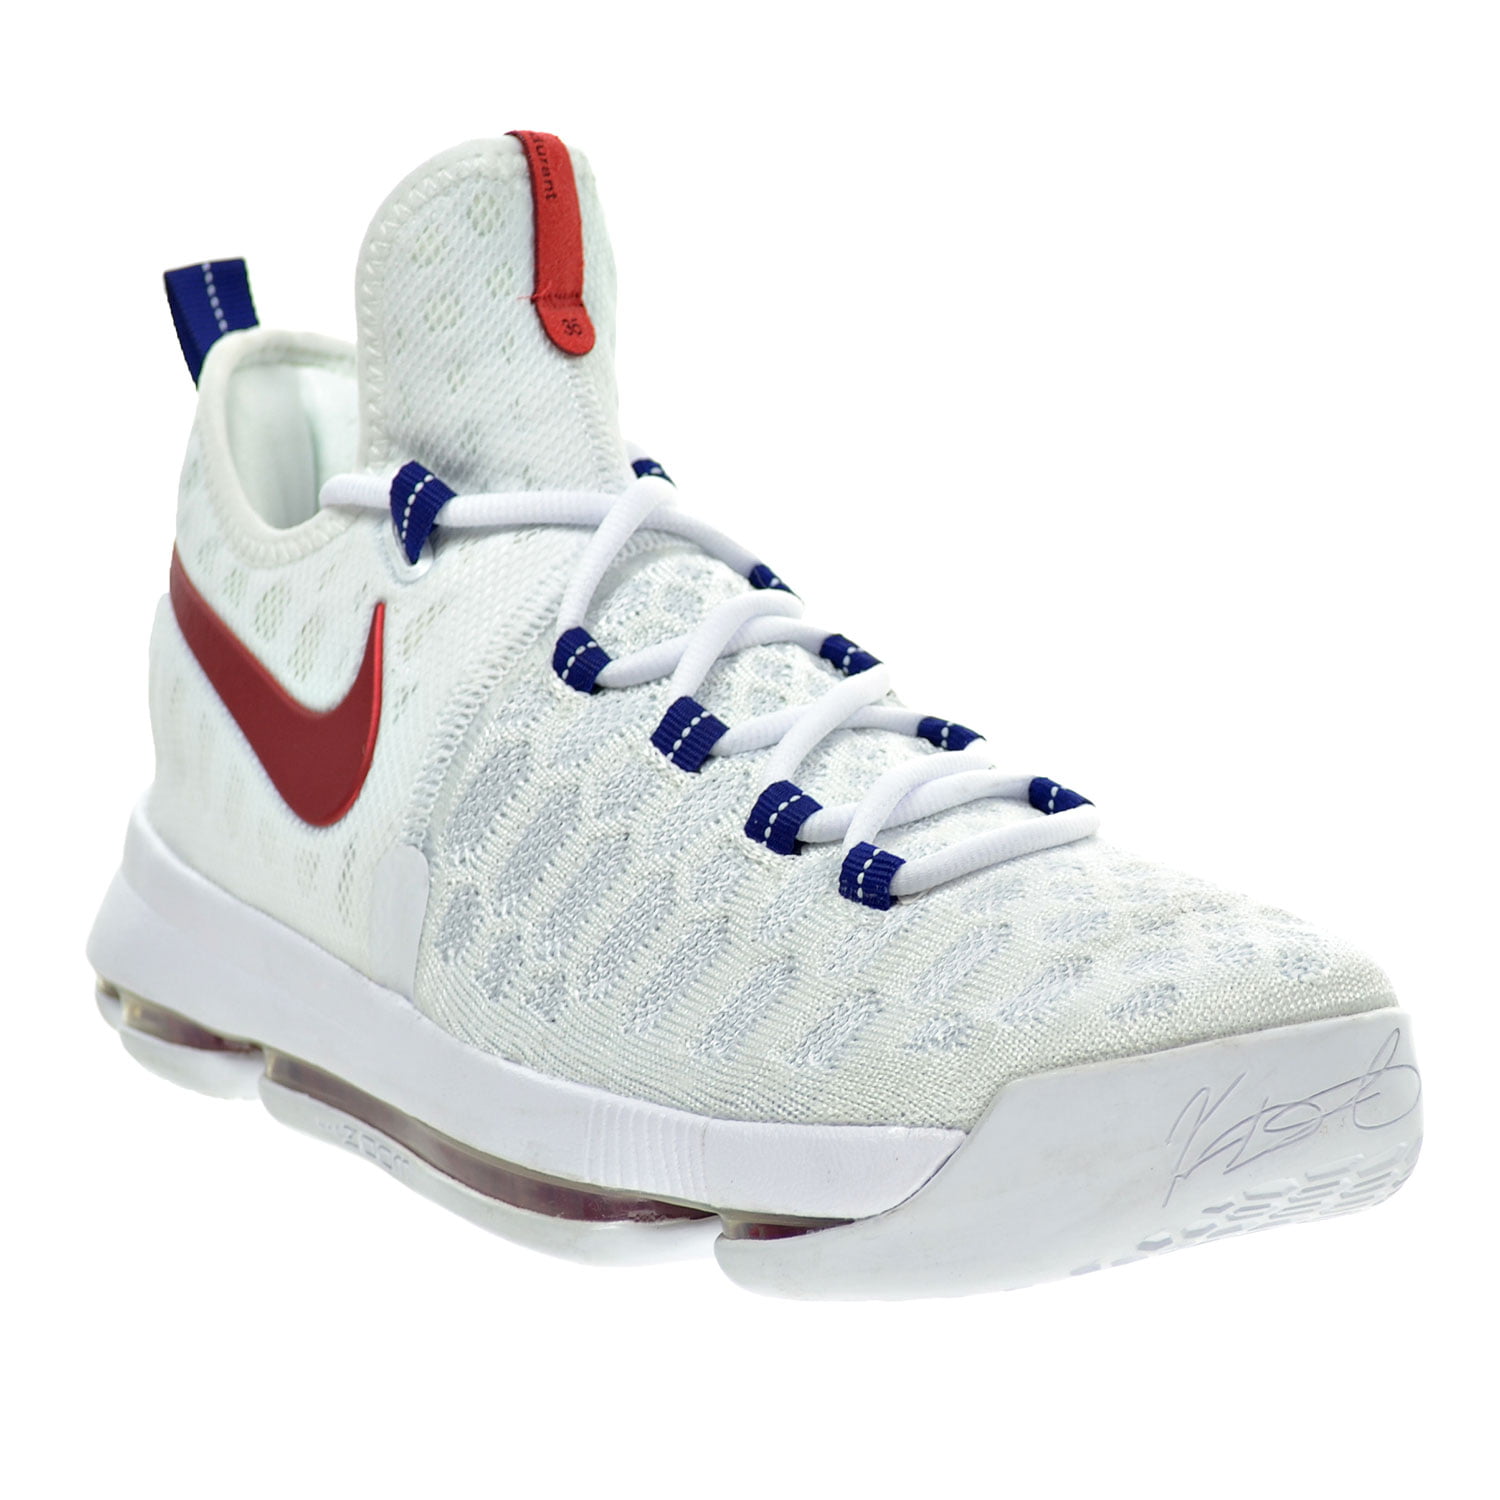 Nike Zoom KD 9 Men's Shoes White/University 843392-160 - Walmart.com